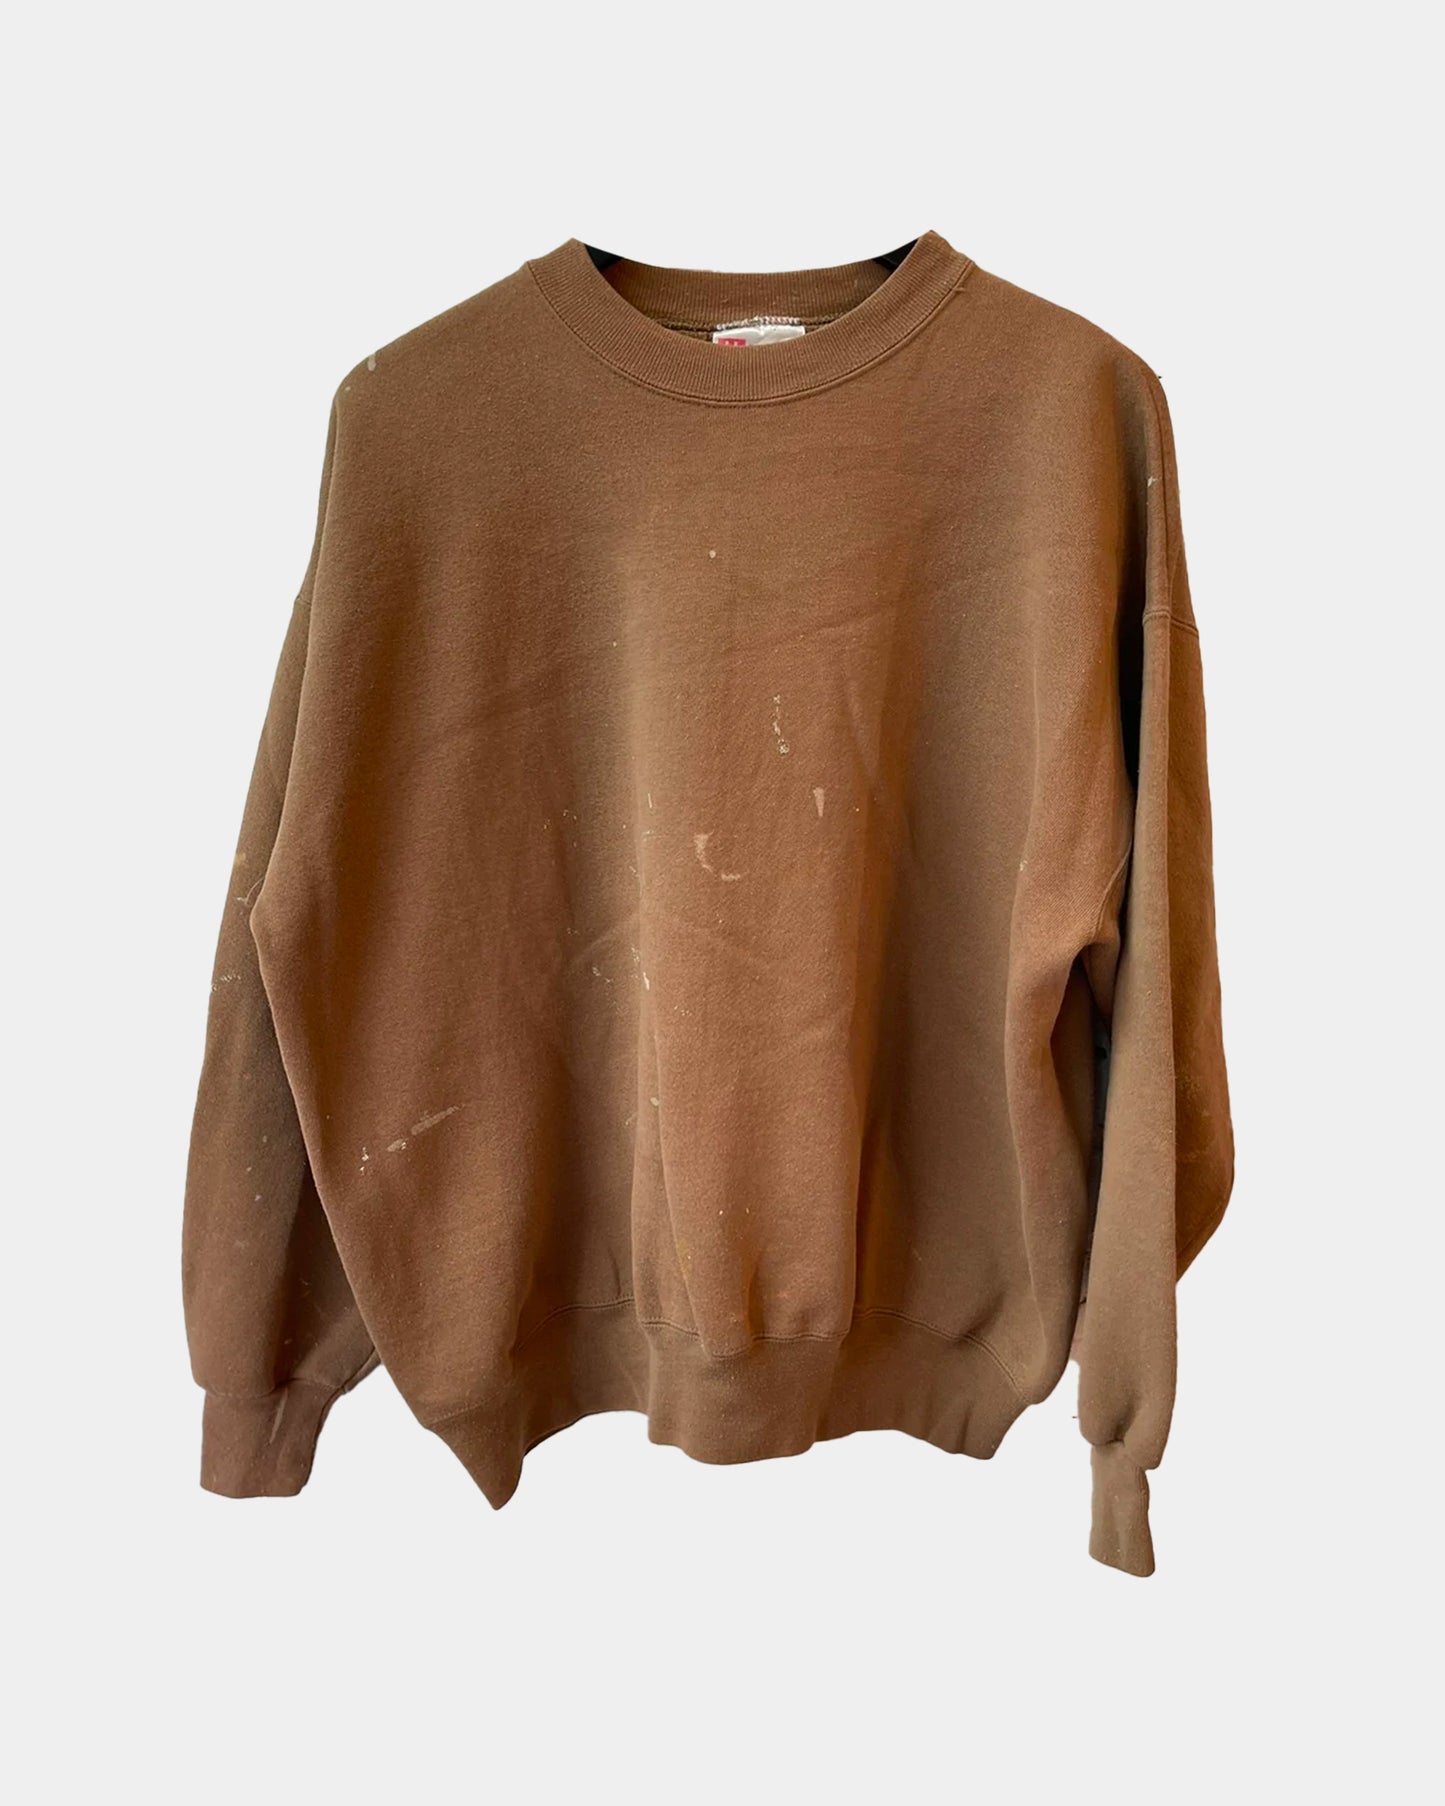 Vintage 90s BLANK THRASHED Light Brown Jumper Sweater L XL